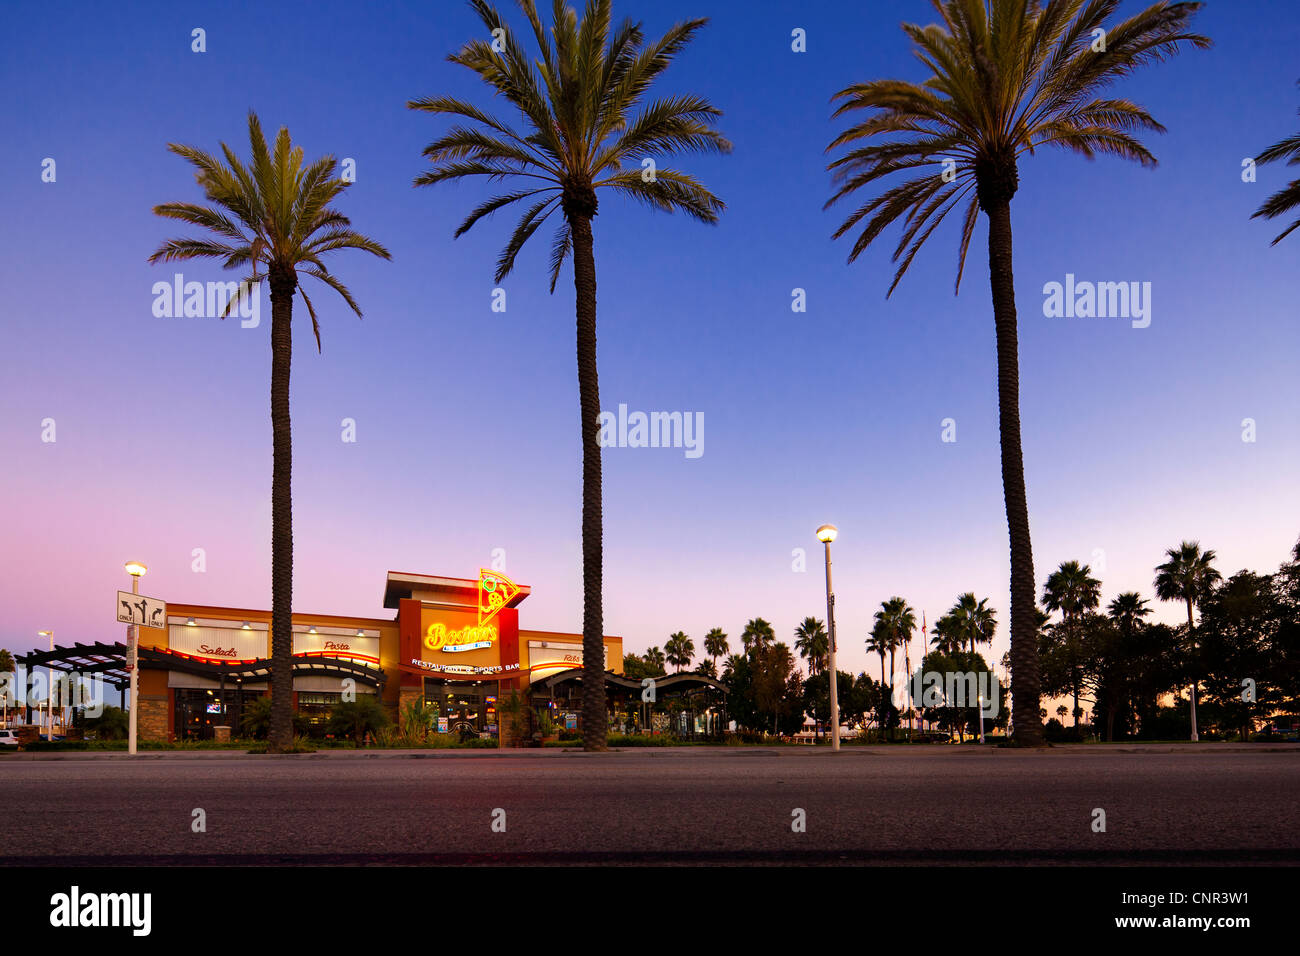 Long Beach California, Gourmet Pizza Restaurant & Sports Bar with palm trees at dusk Stock Photo